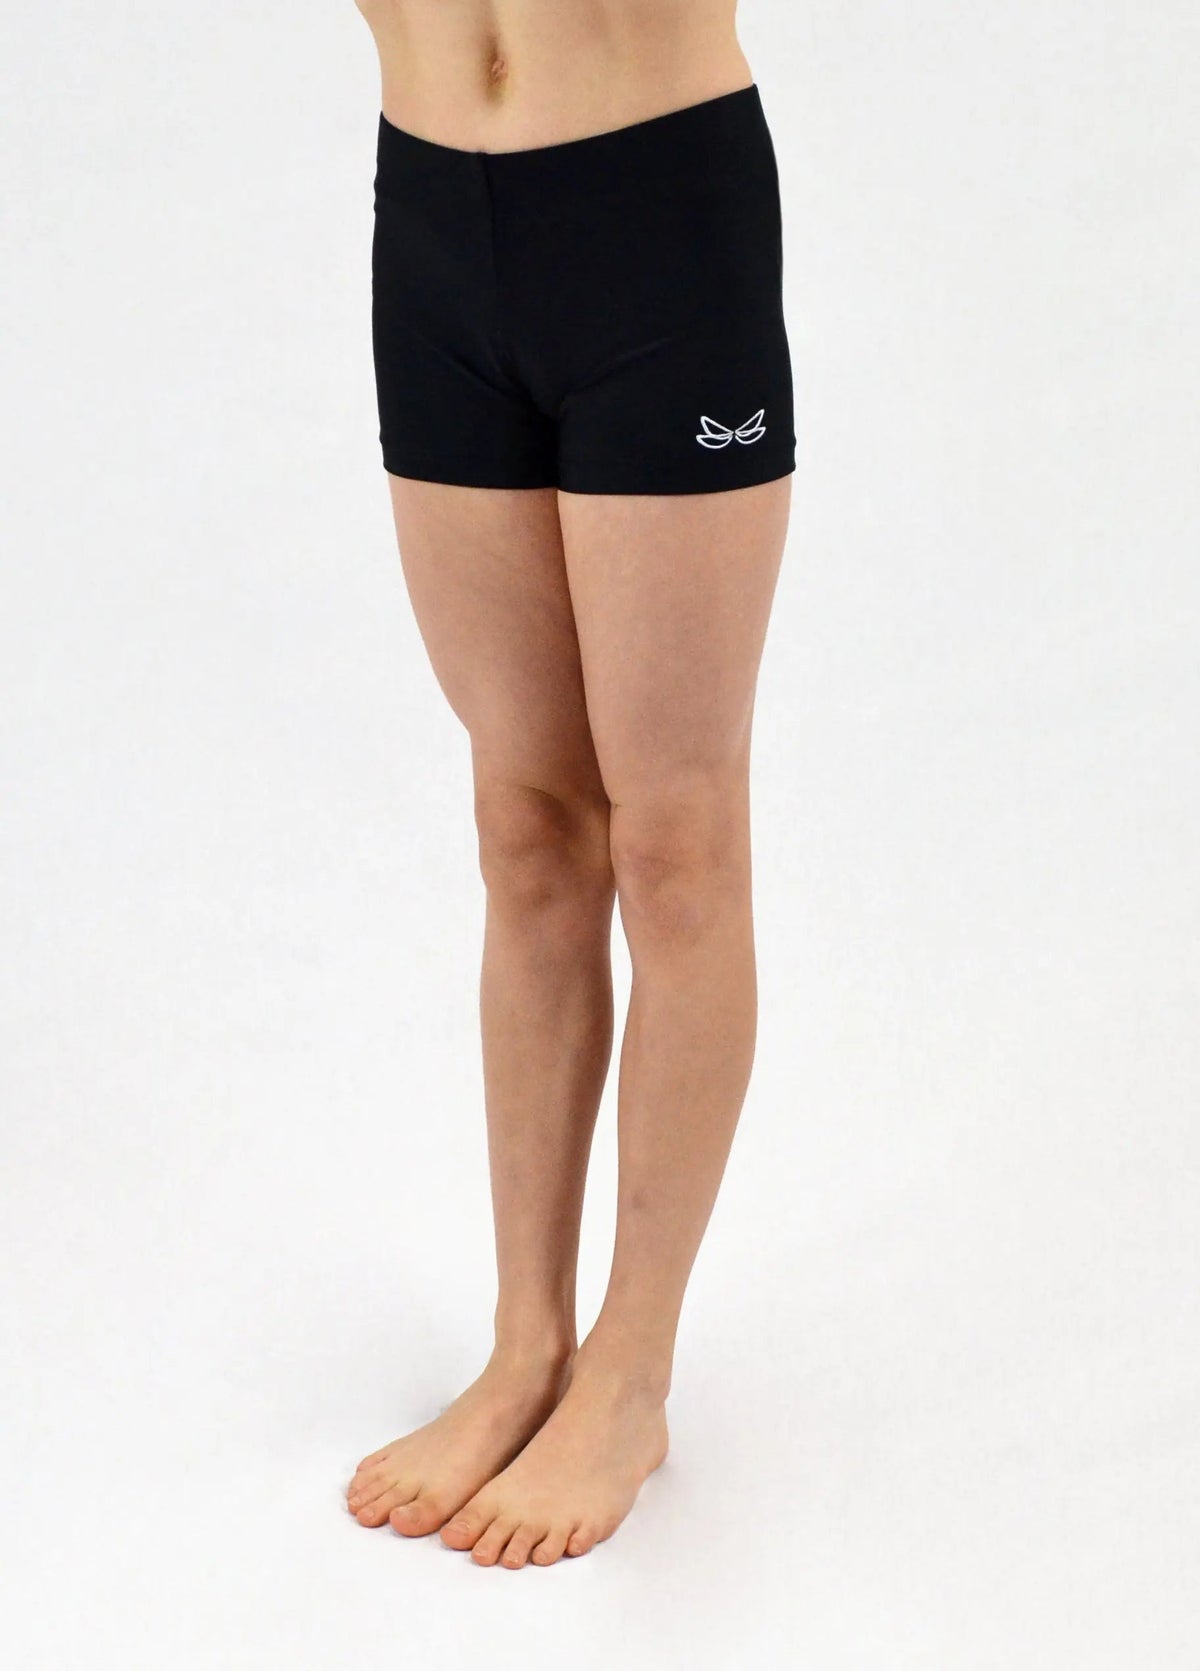 Girls Black Lycra Shorts - Dragonfly Leotards - Children's Sportswear